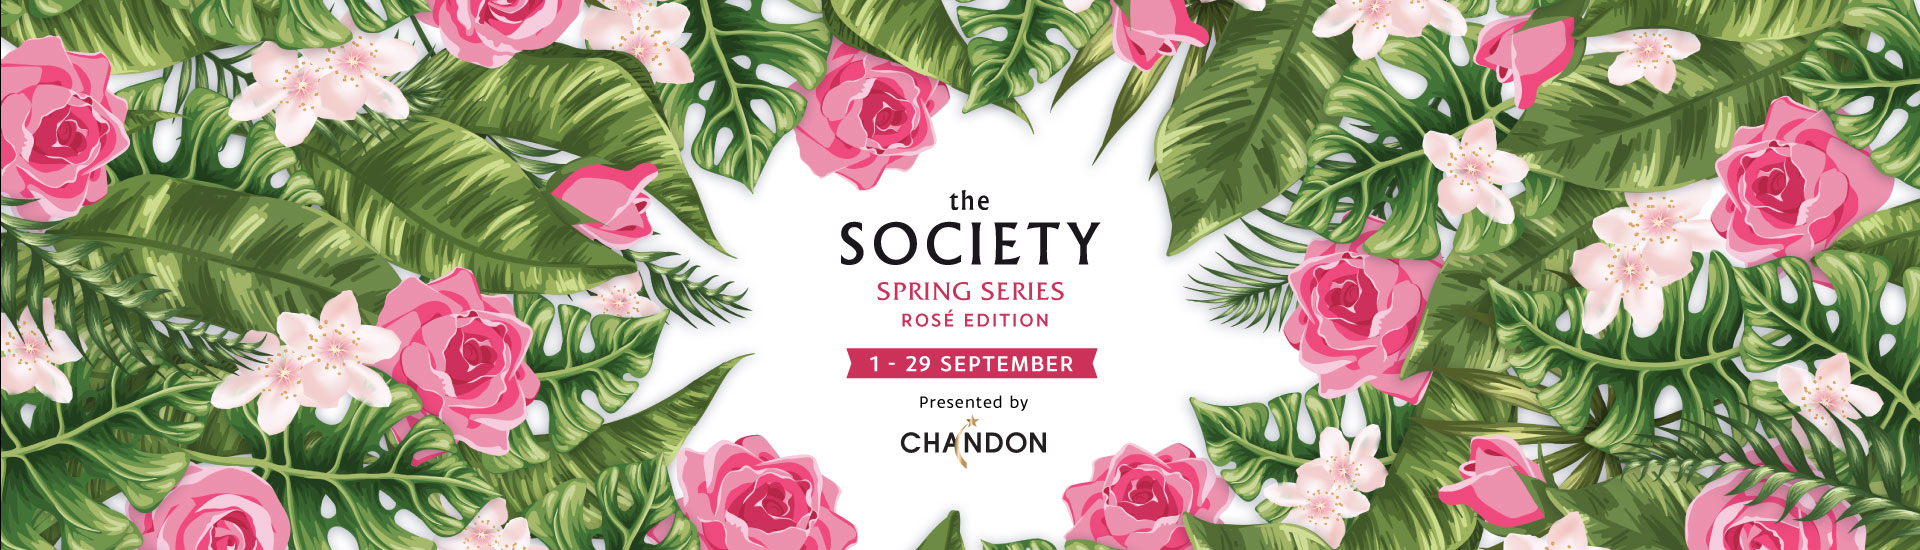 Society Spring Series Banner